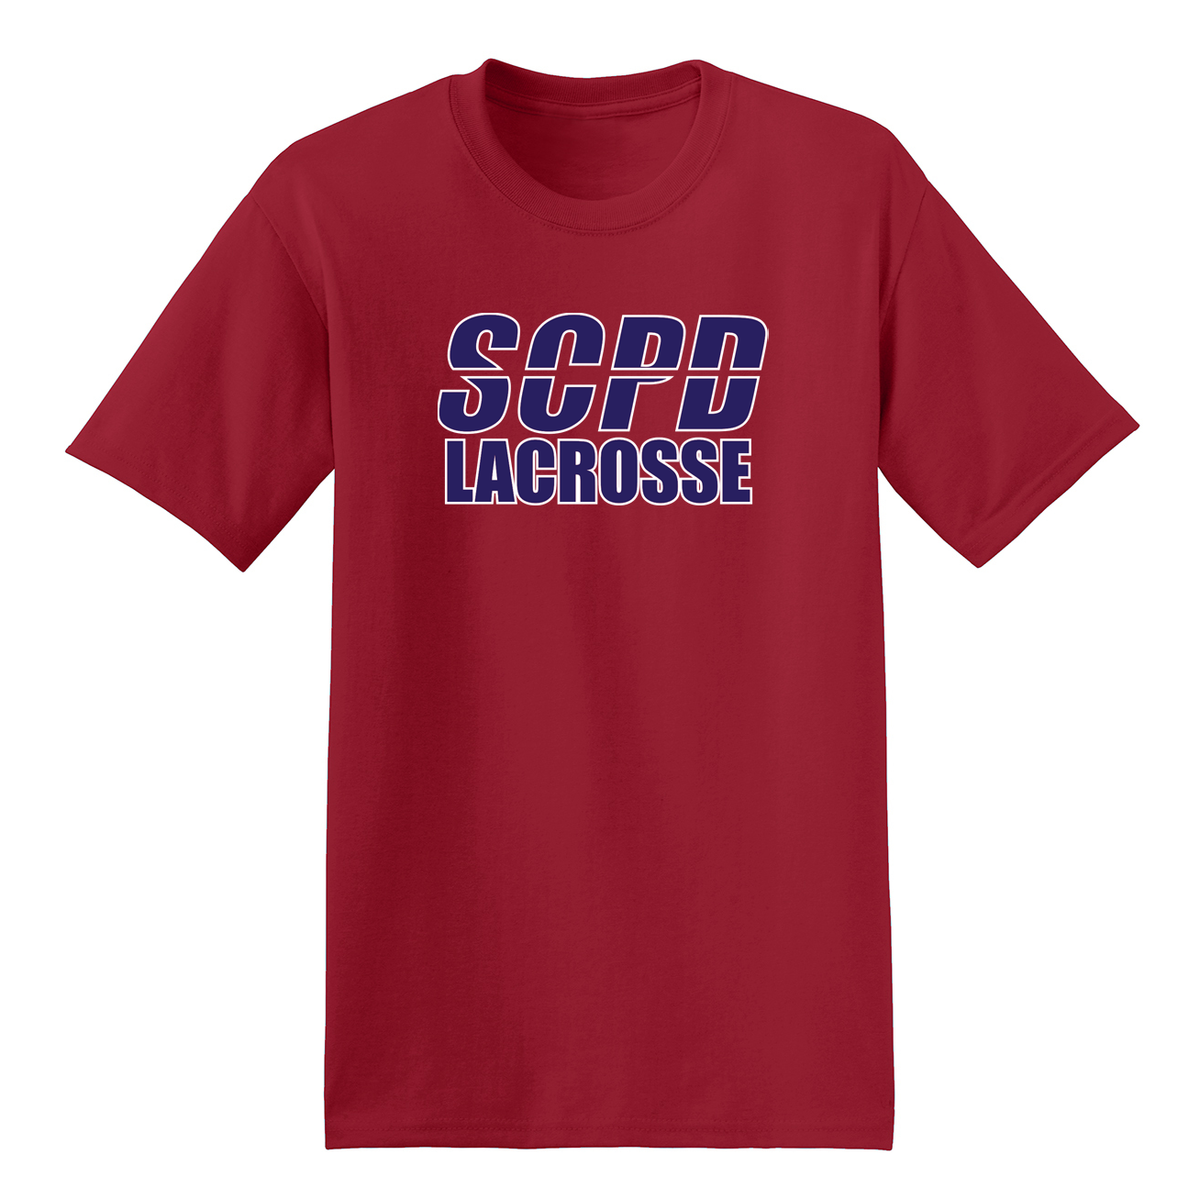 SCPD Lacrosse T-Shirt